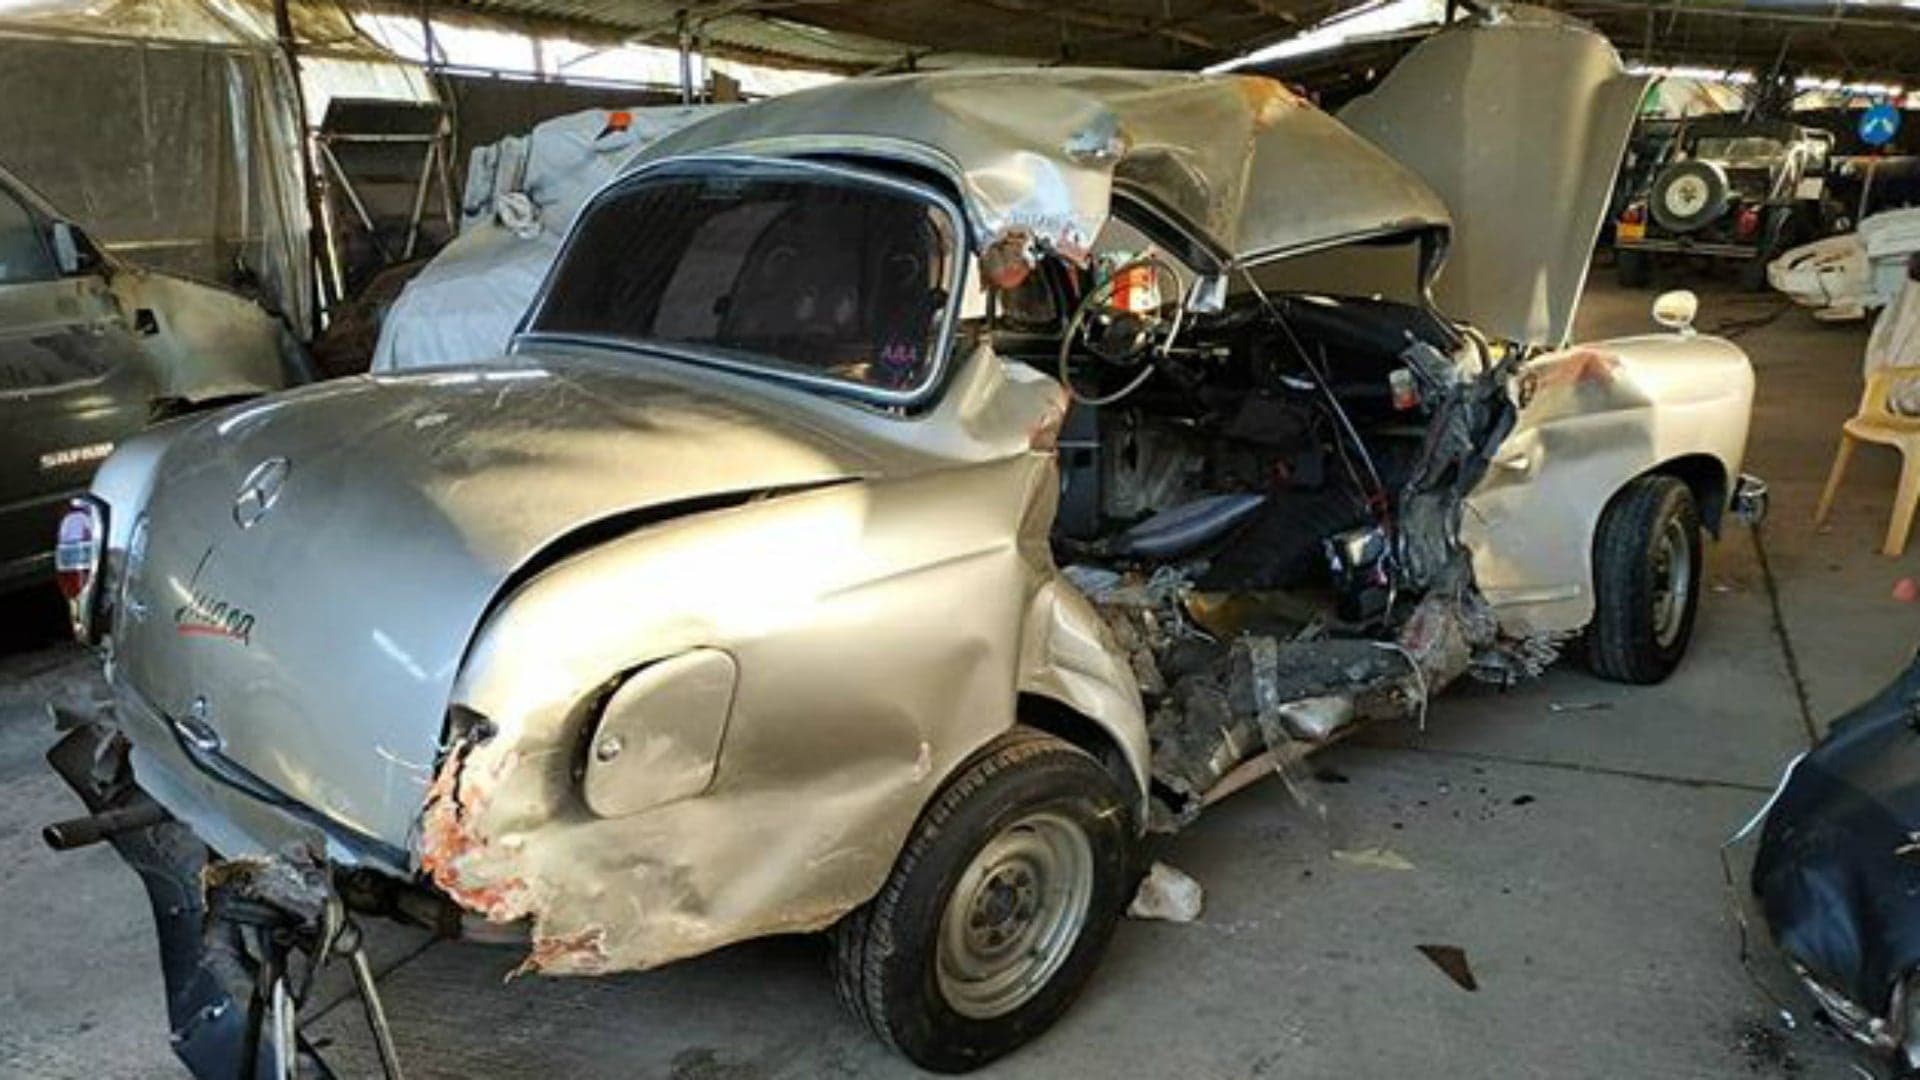 Roadtripping Photographer’s Classic 1960 Mercedes Totaled in Jerusalem Crash